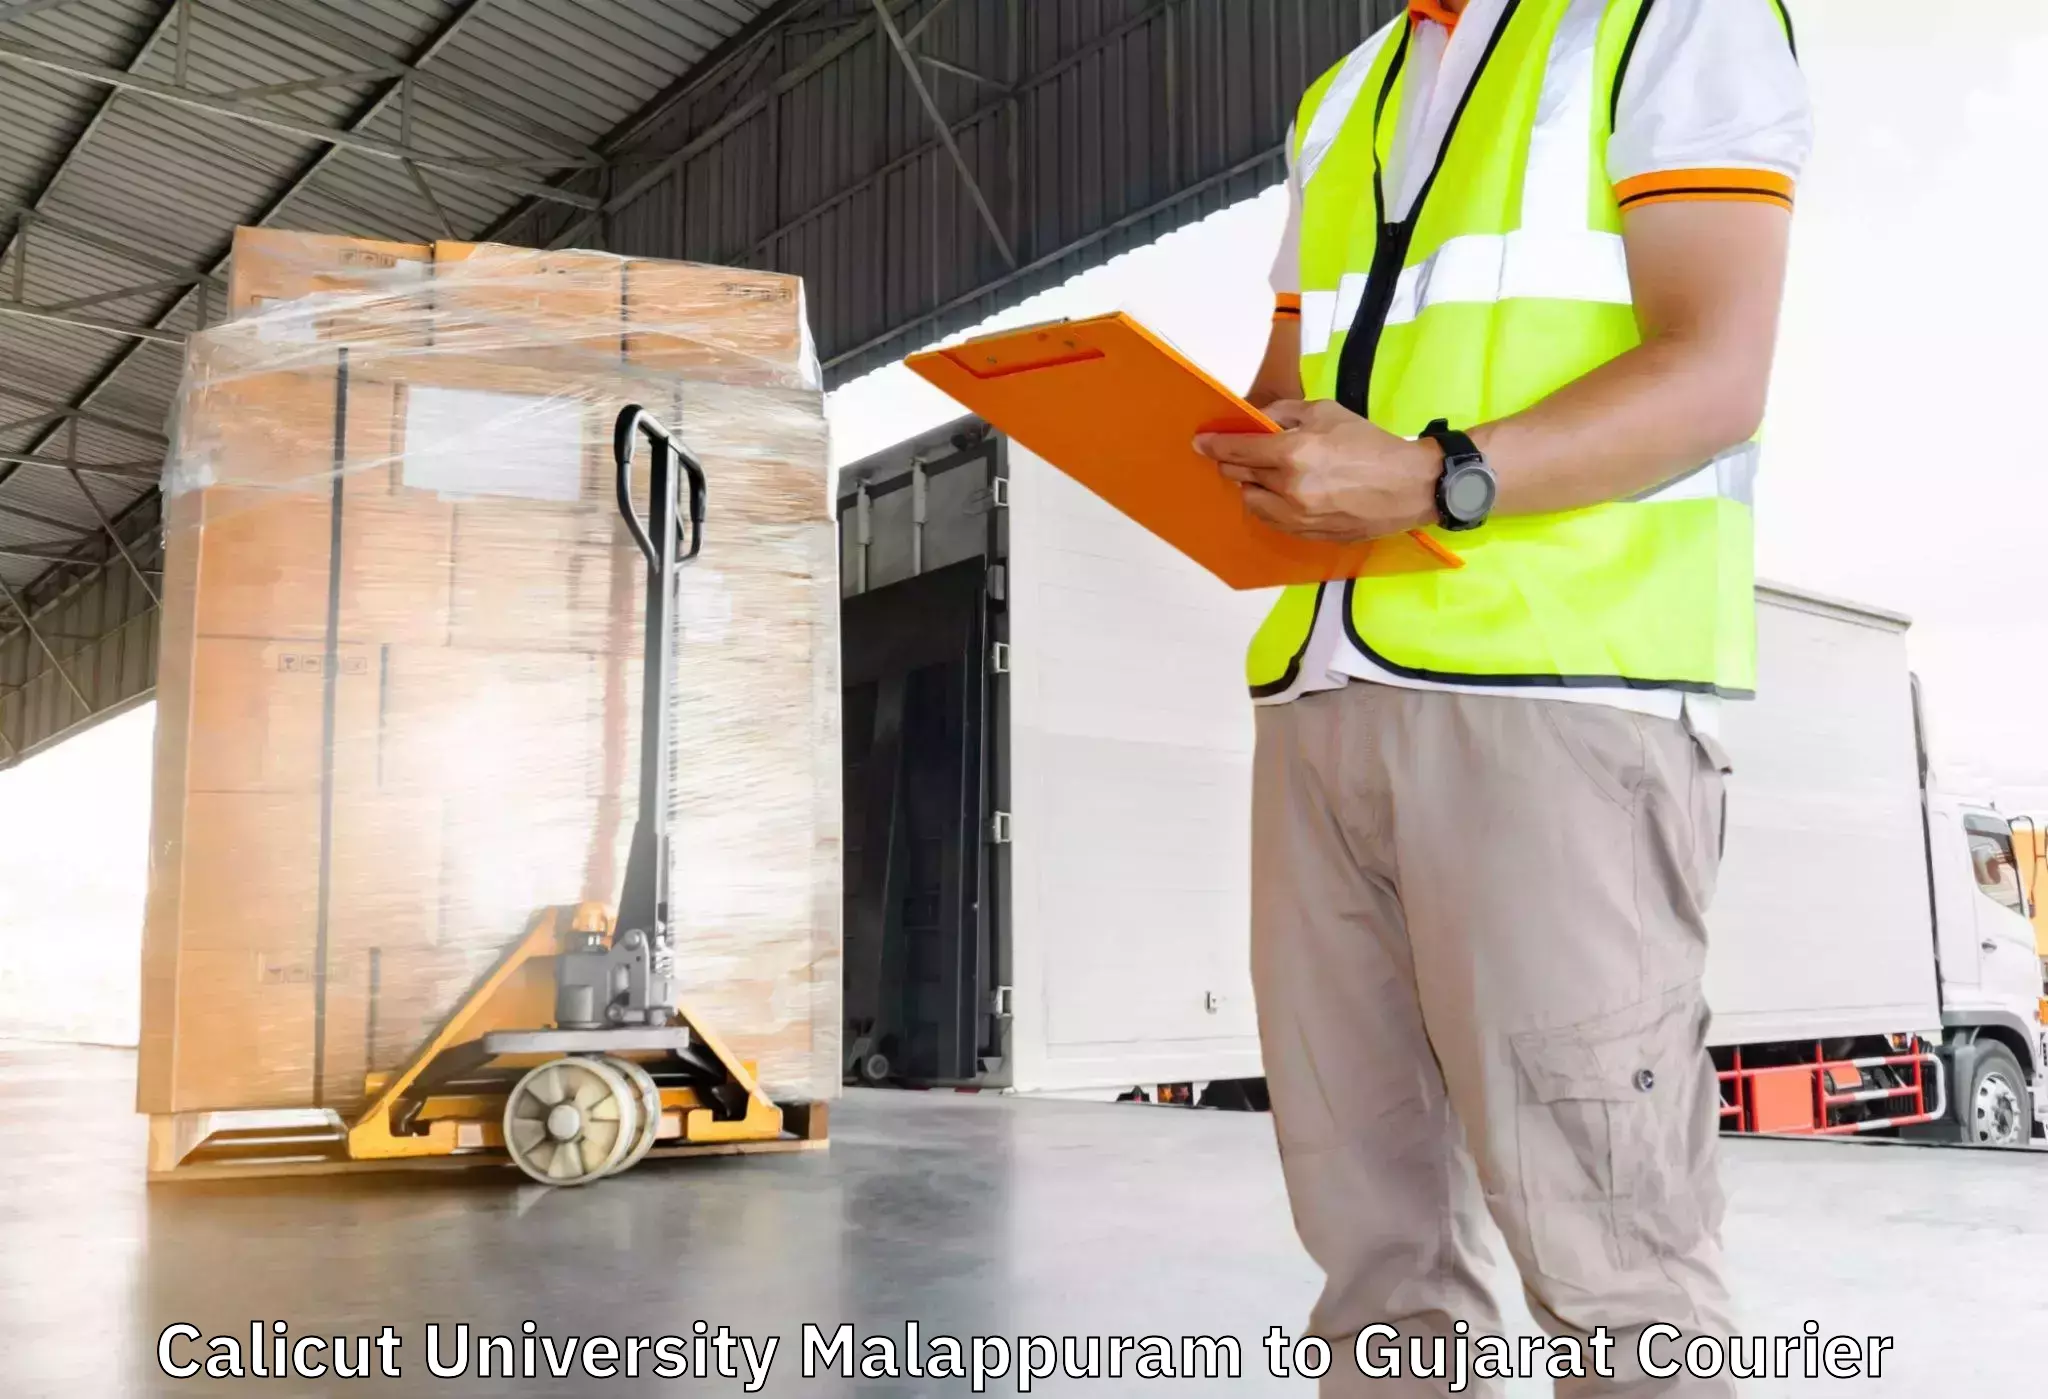 Furniture transport company Calicut University Malappuram to Ahmedabad